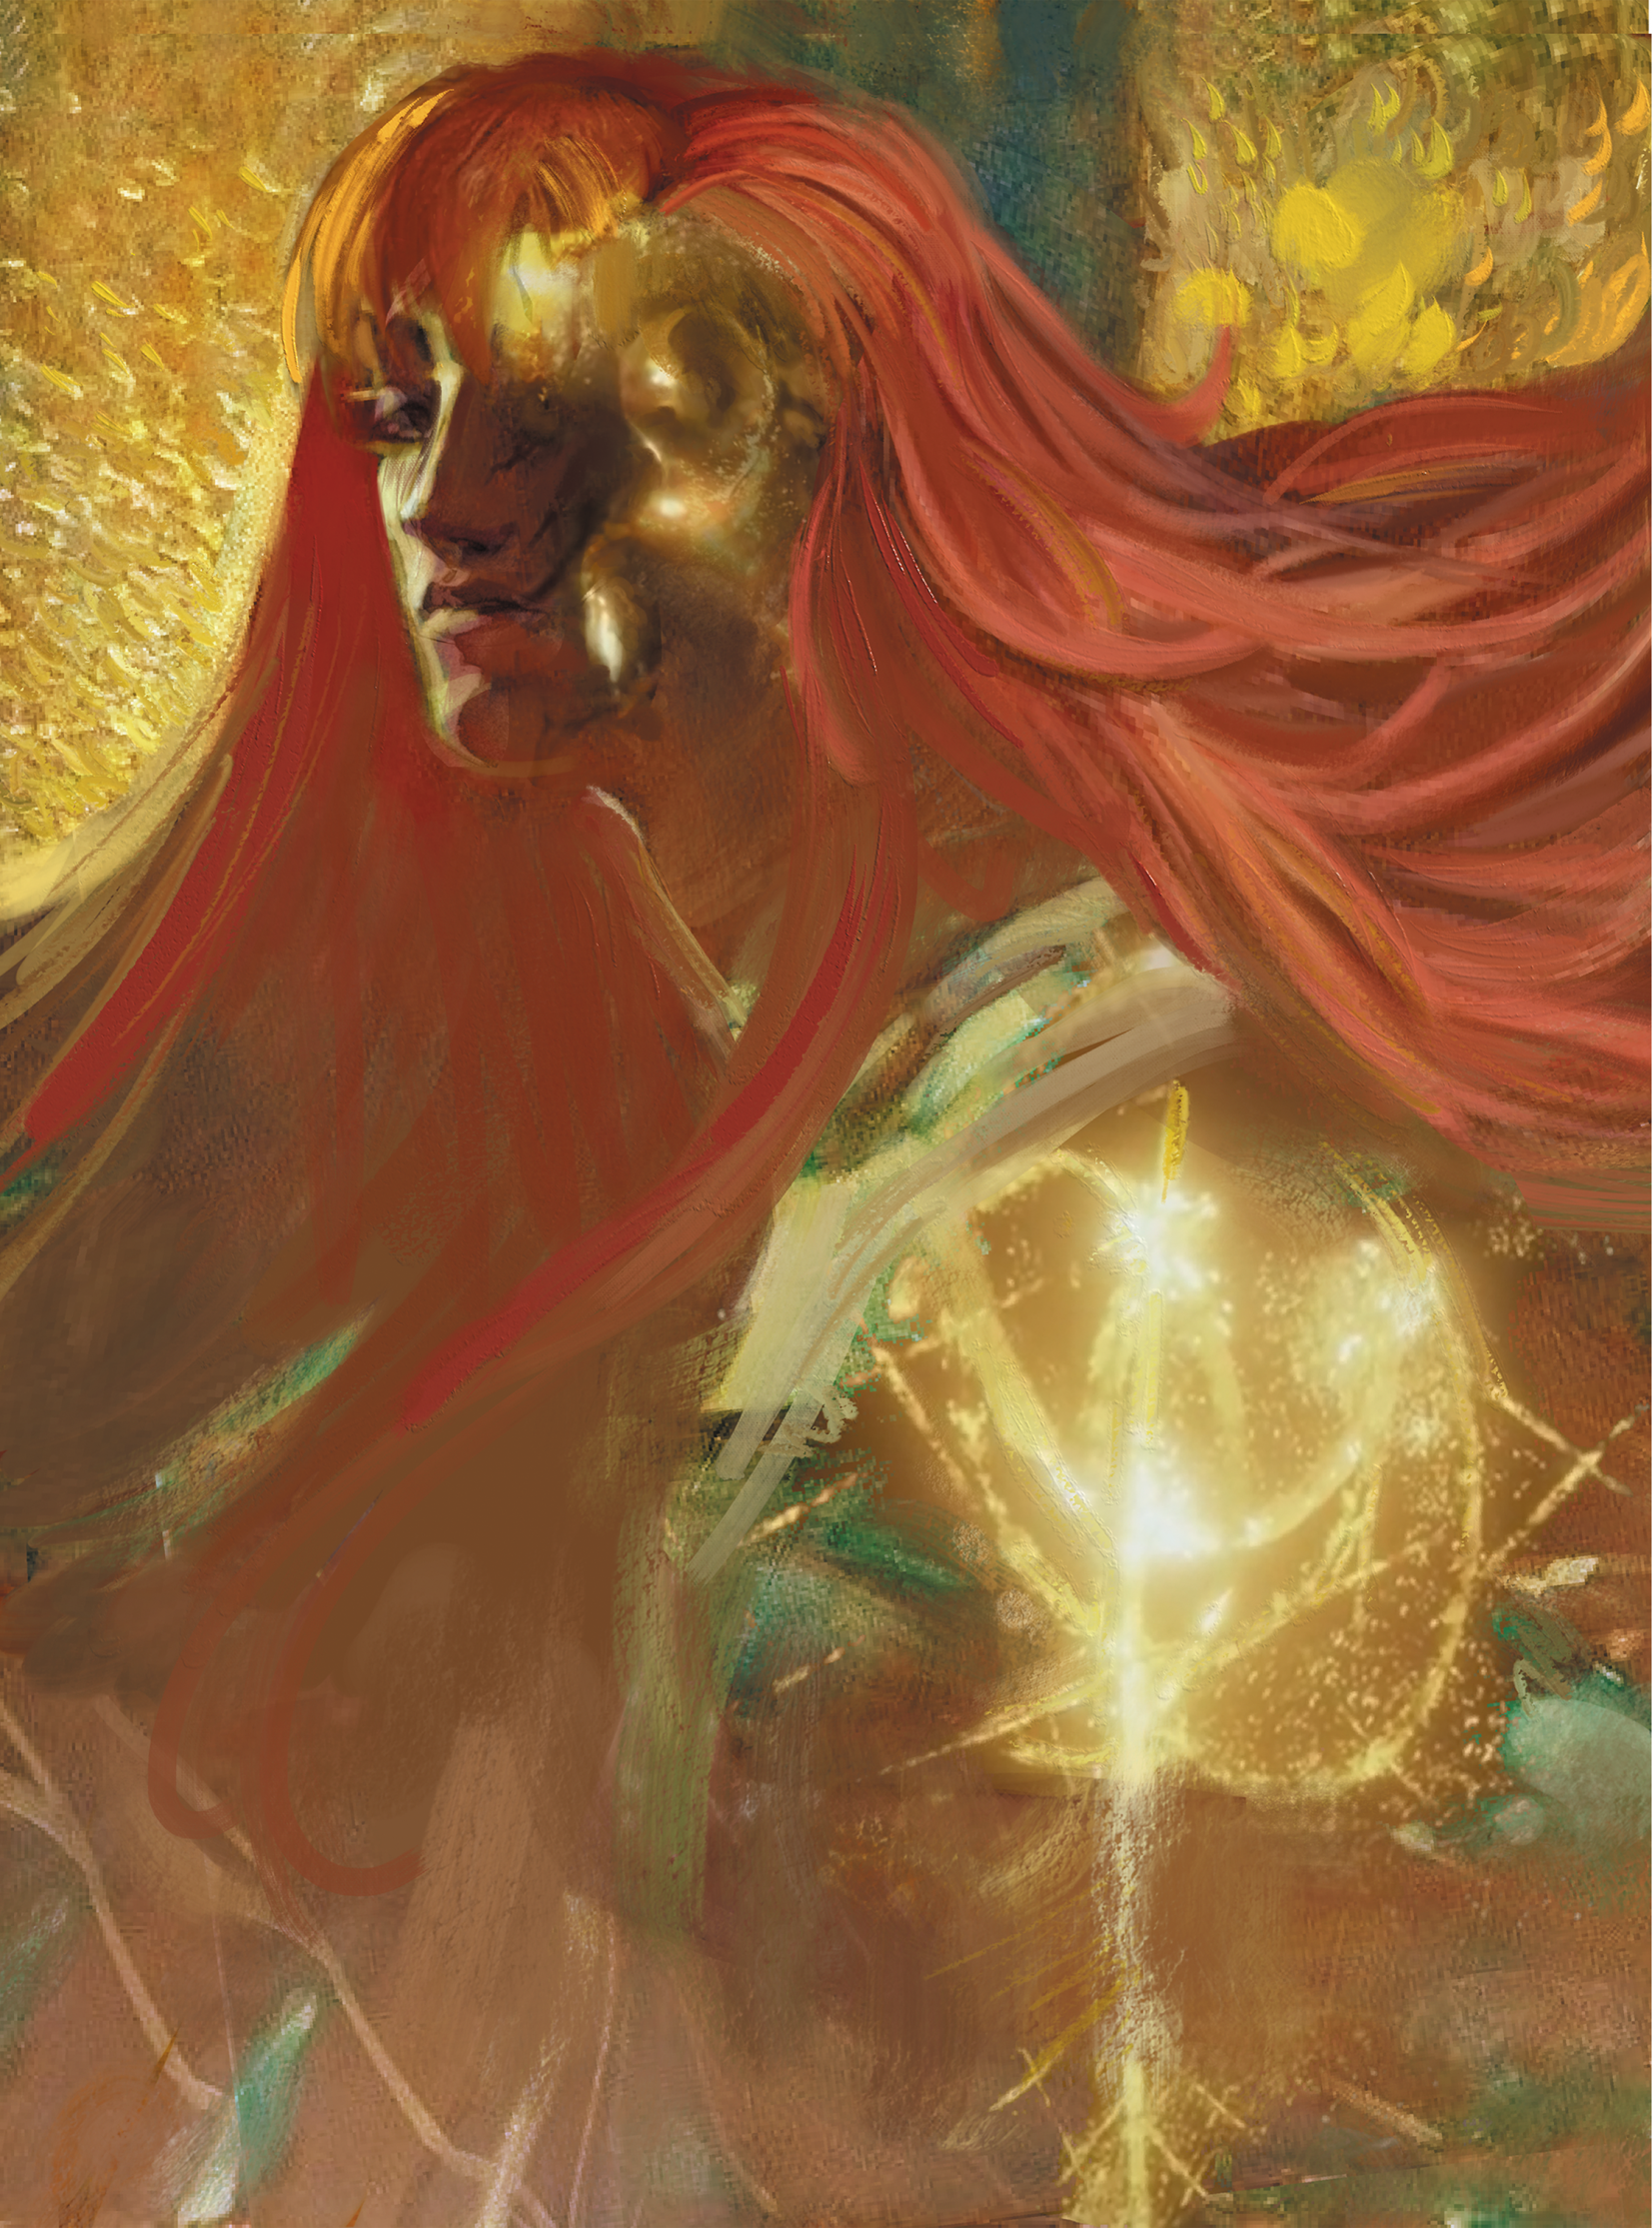 Radagon of the golden order, Elden ring by Cherraluna on DeviantArt